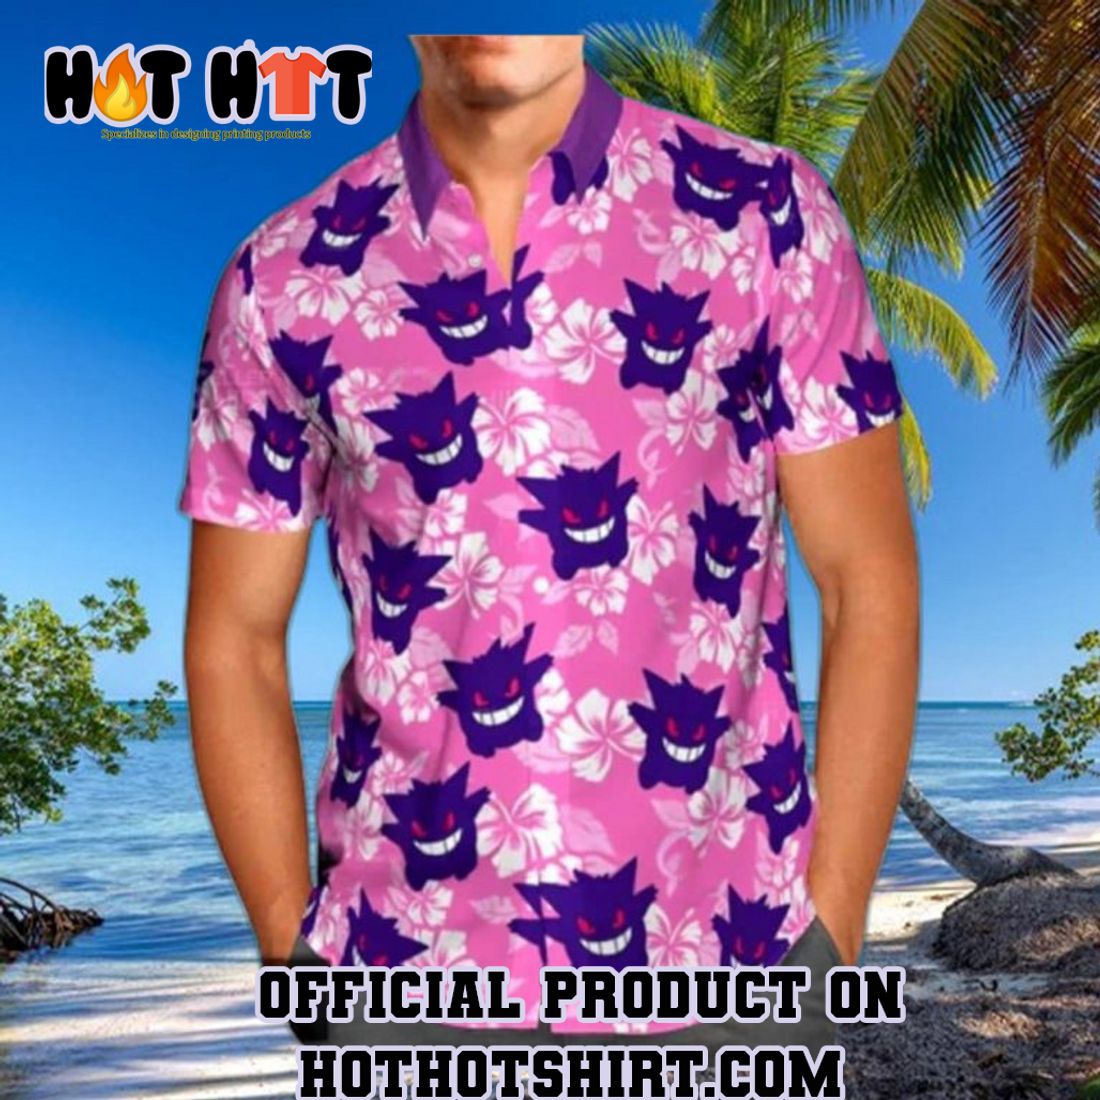 MLB Texas Rangers Hawaiian Shirt Aloha Mascot Trendy Summer Vacation Gift